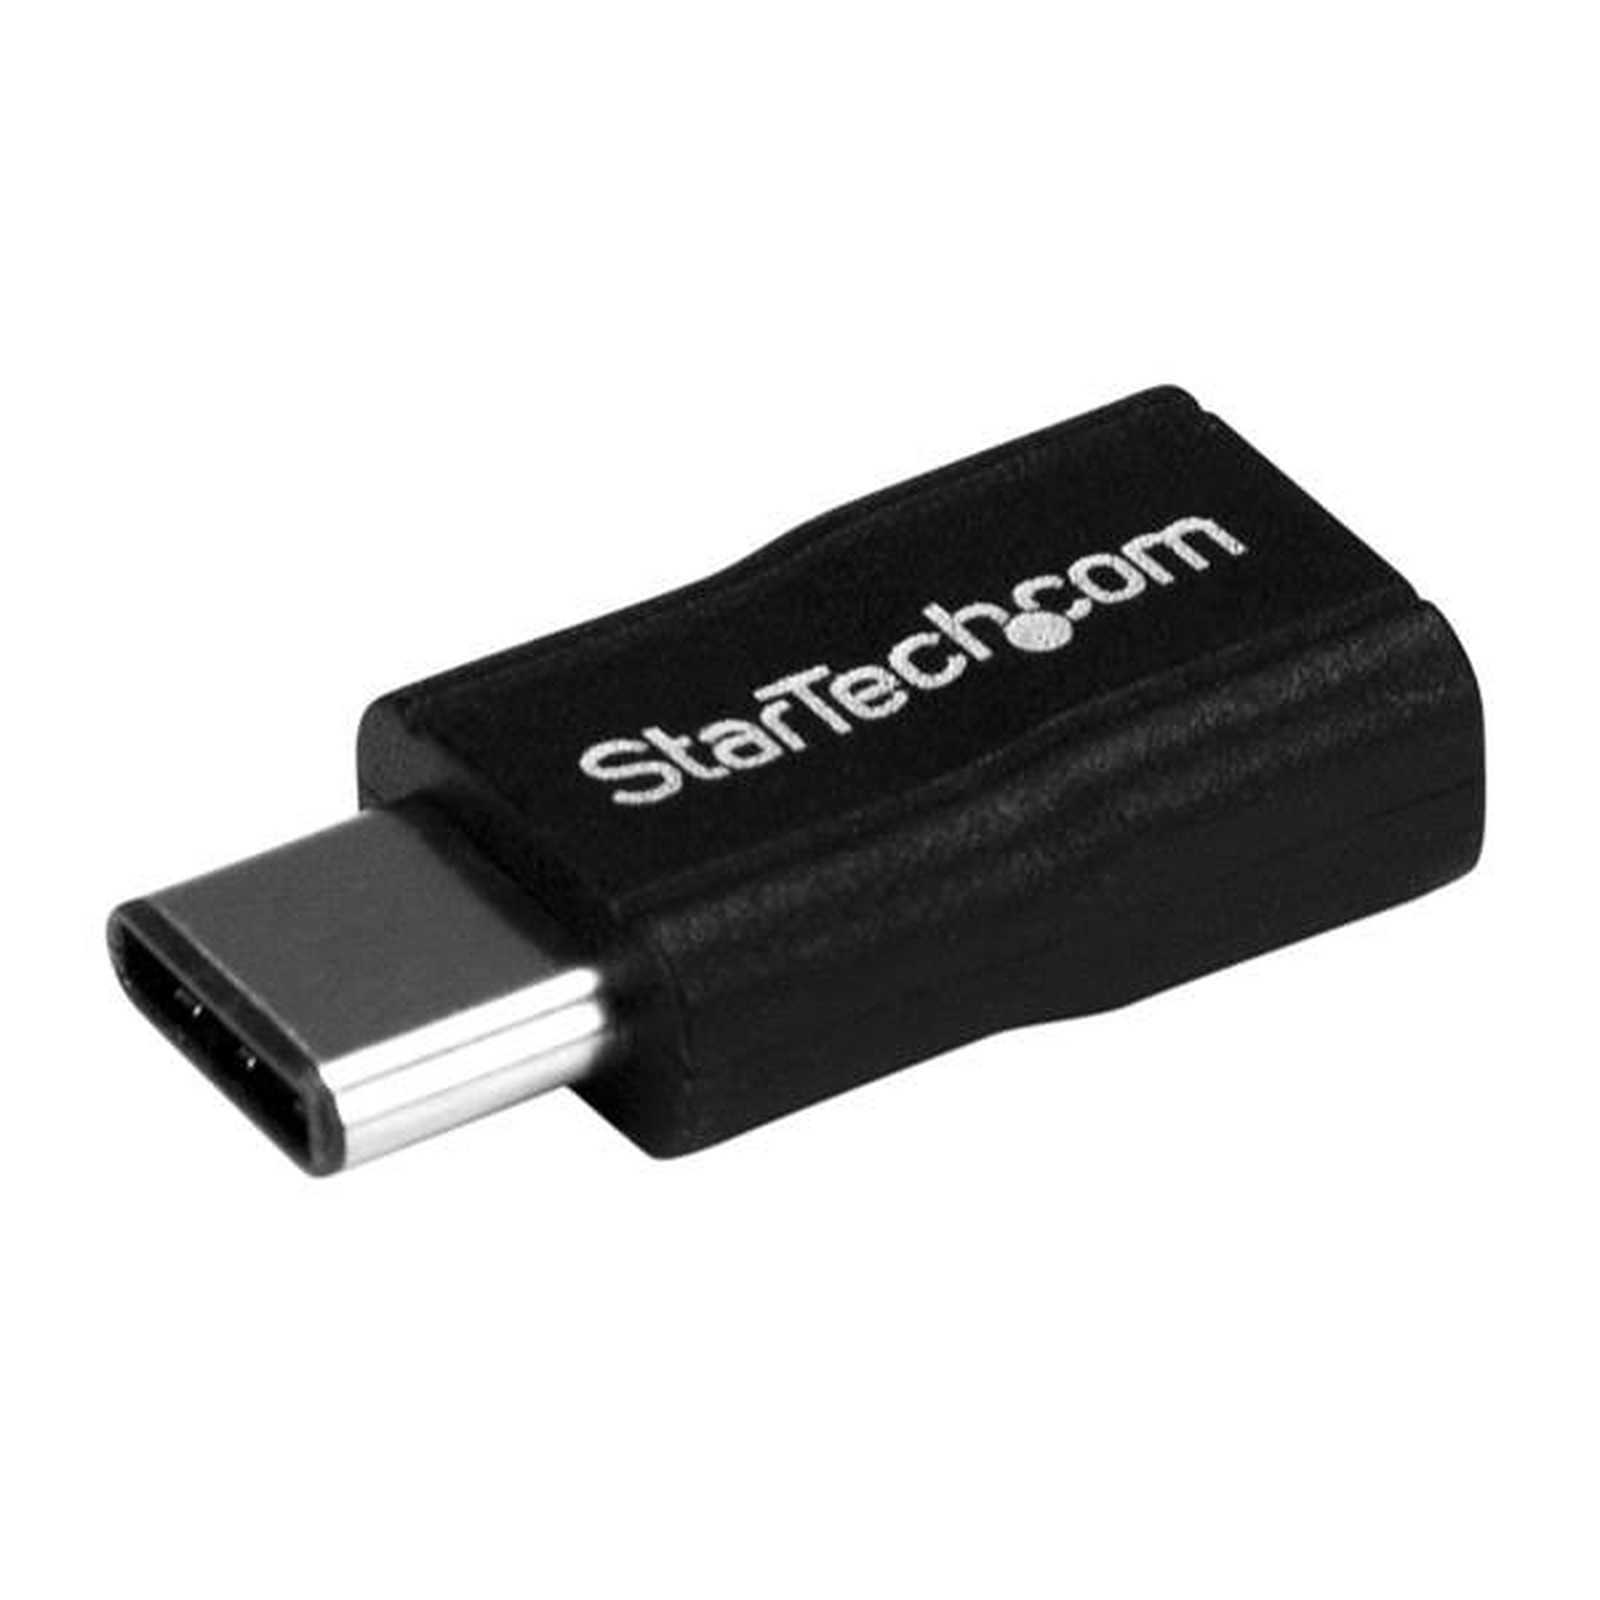 StarTech.com USB2CUBADP - USB StarTech.com